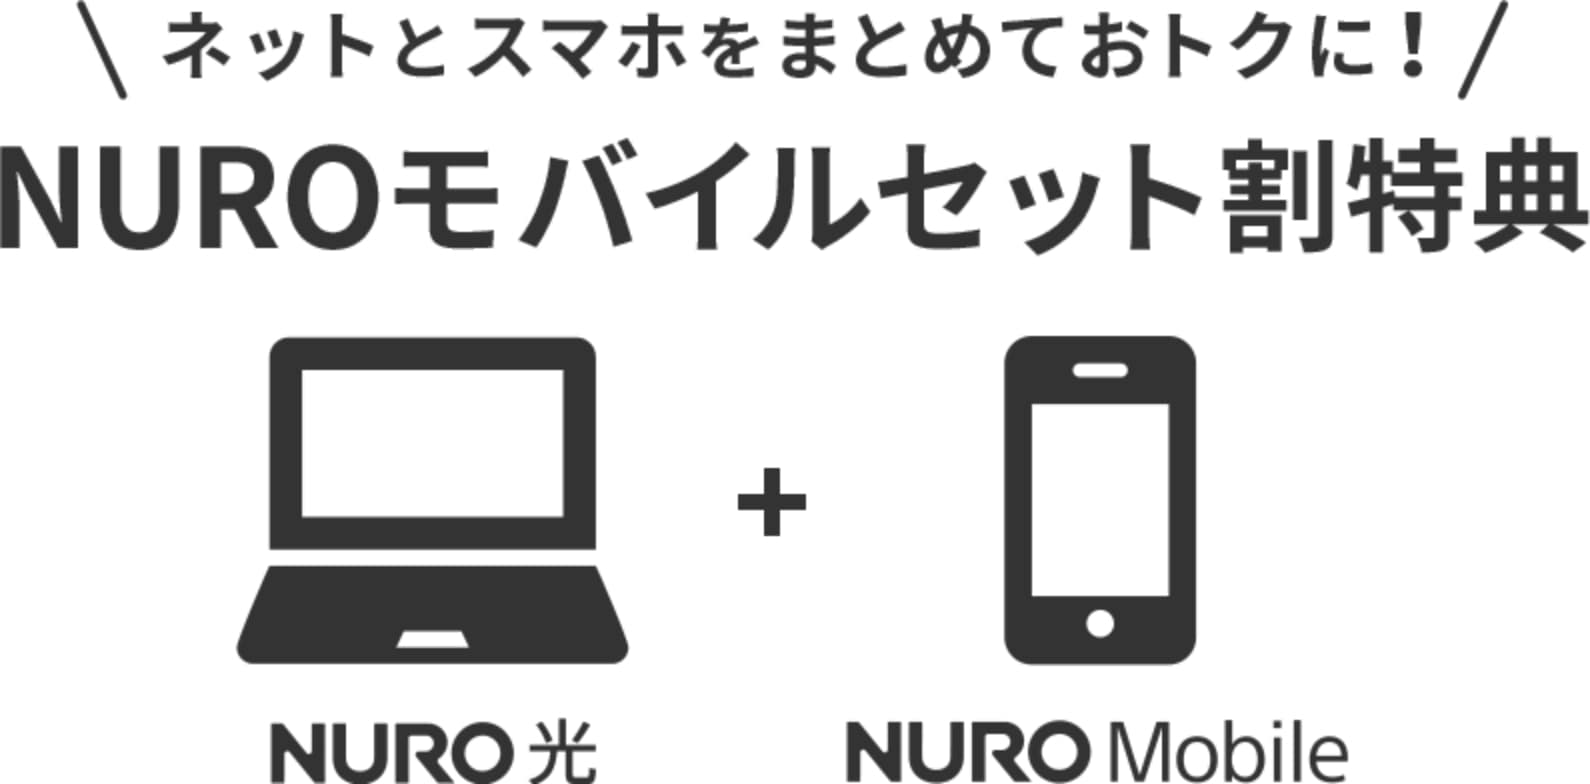 NUROモバイルとNURO光のセット割